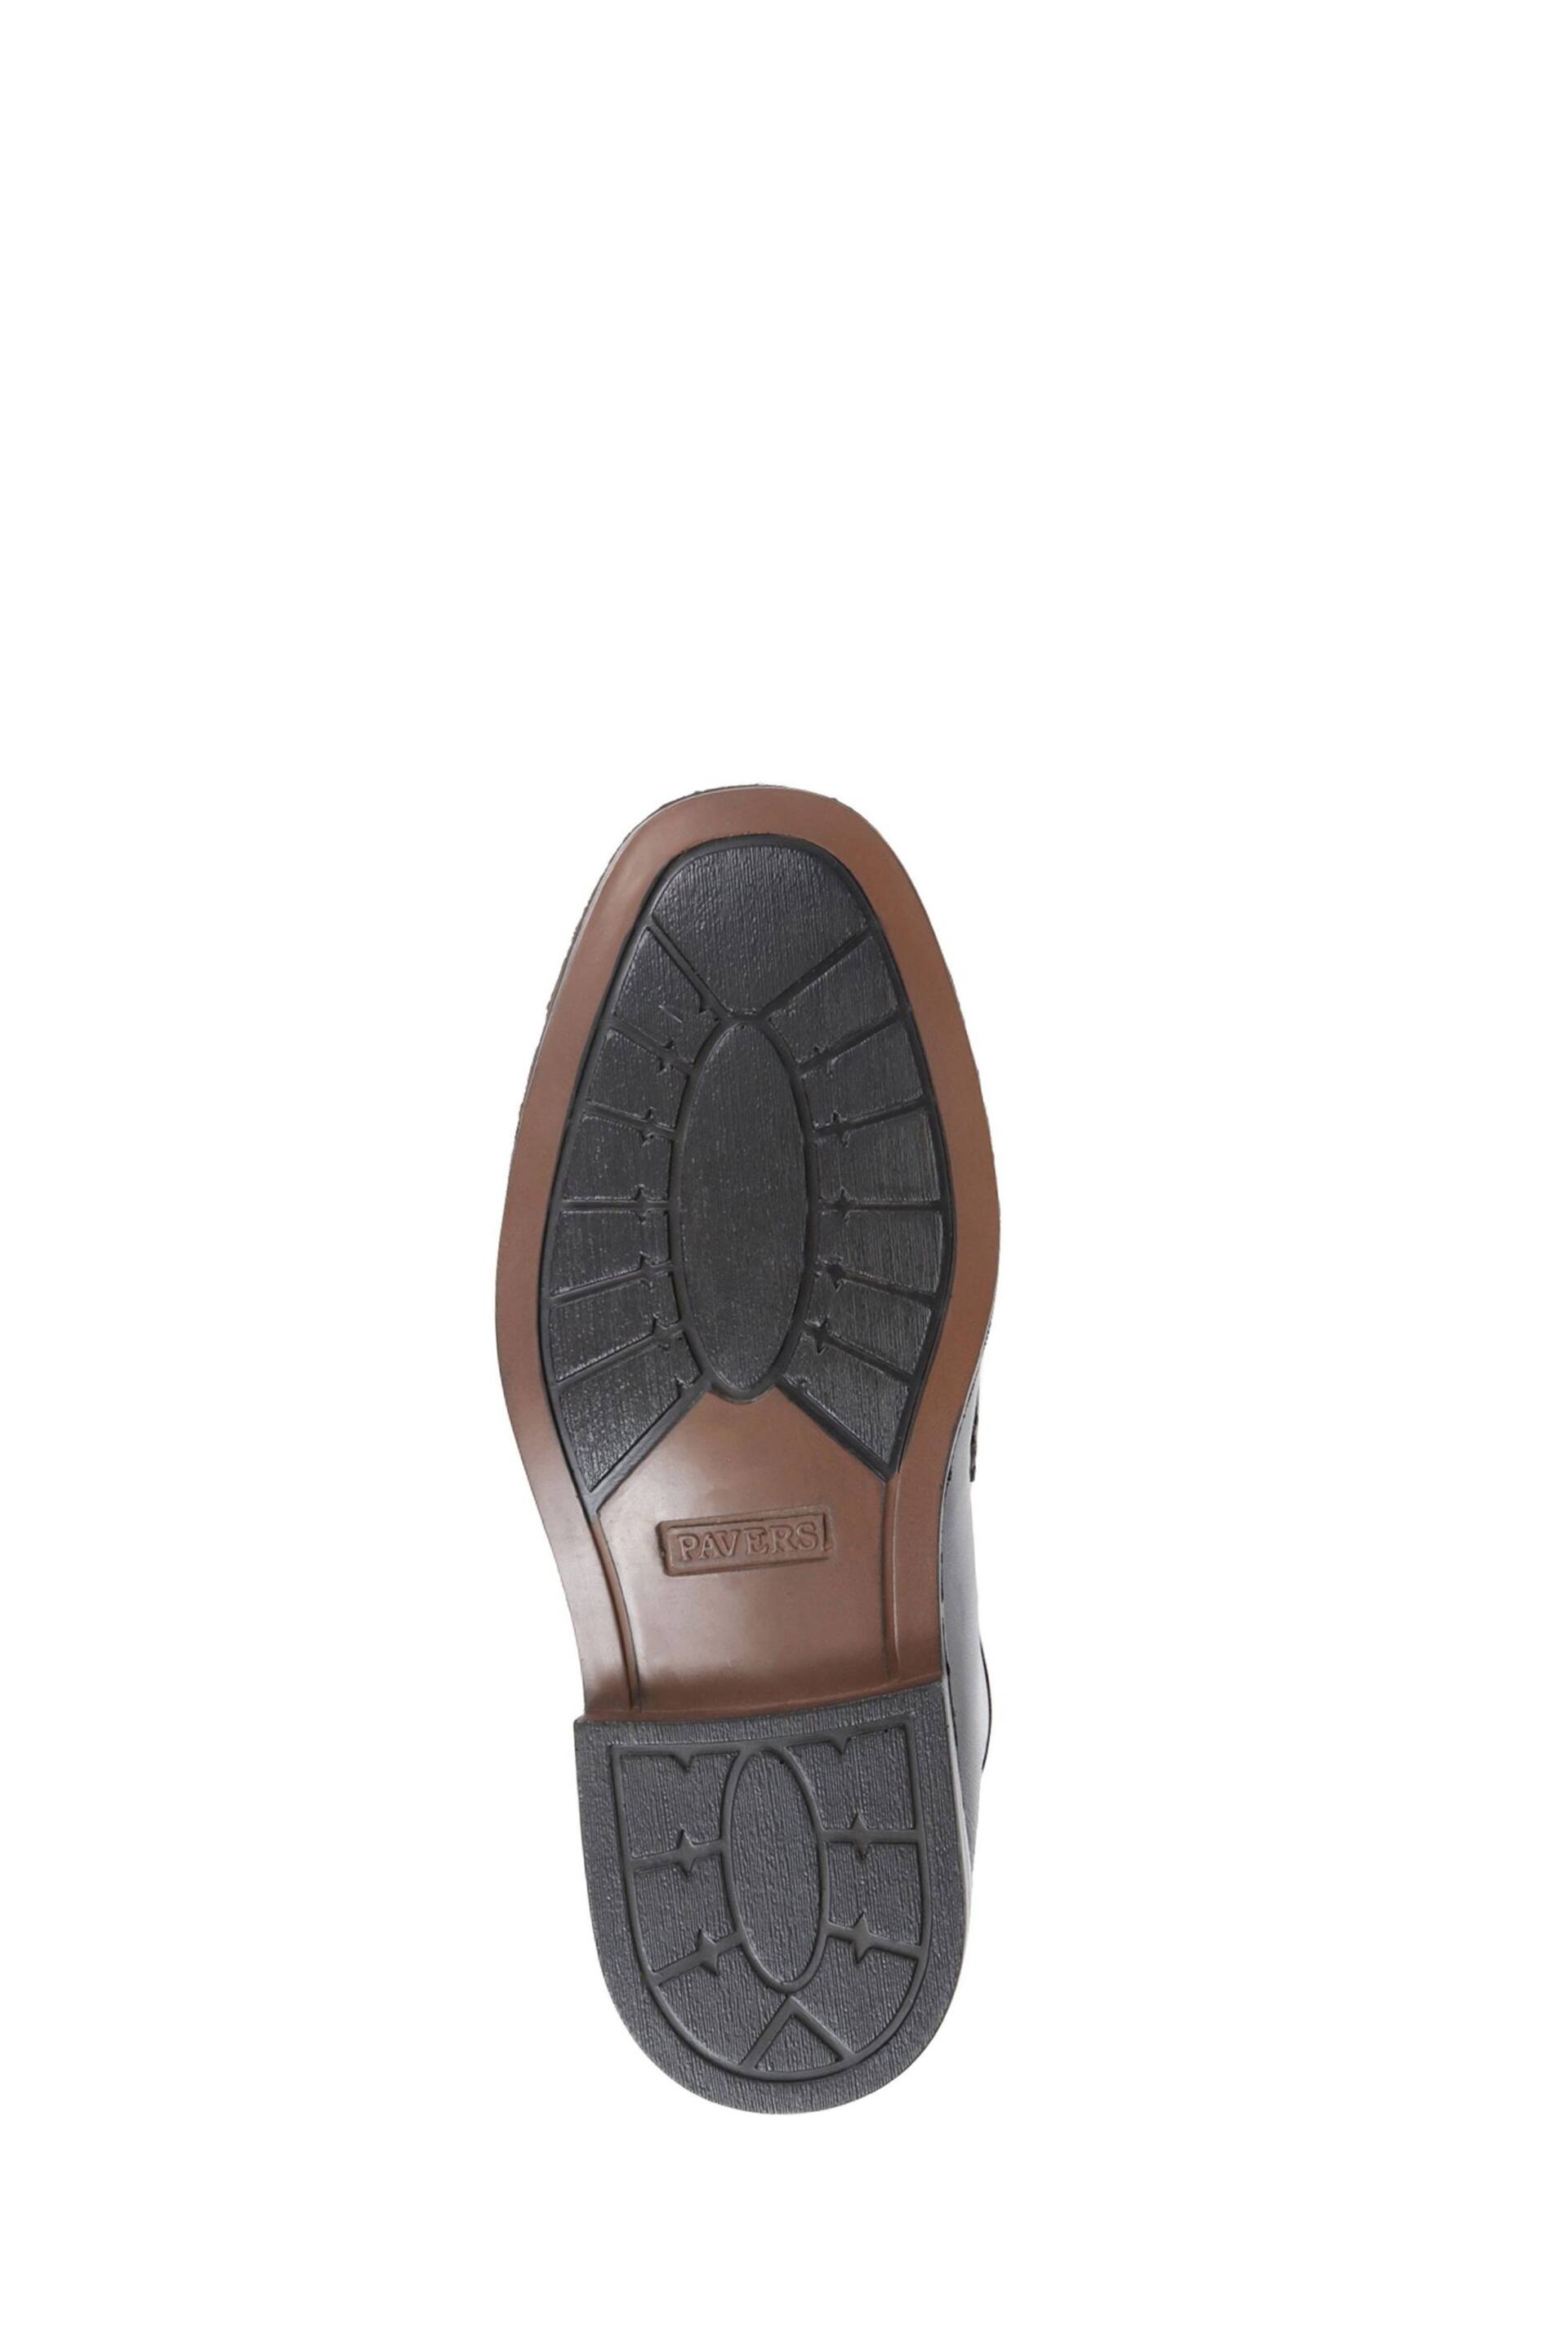 Pavers Gents Black Moccasin Smart Shoes - Image 5 of 5